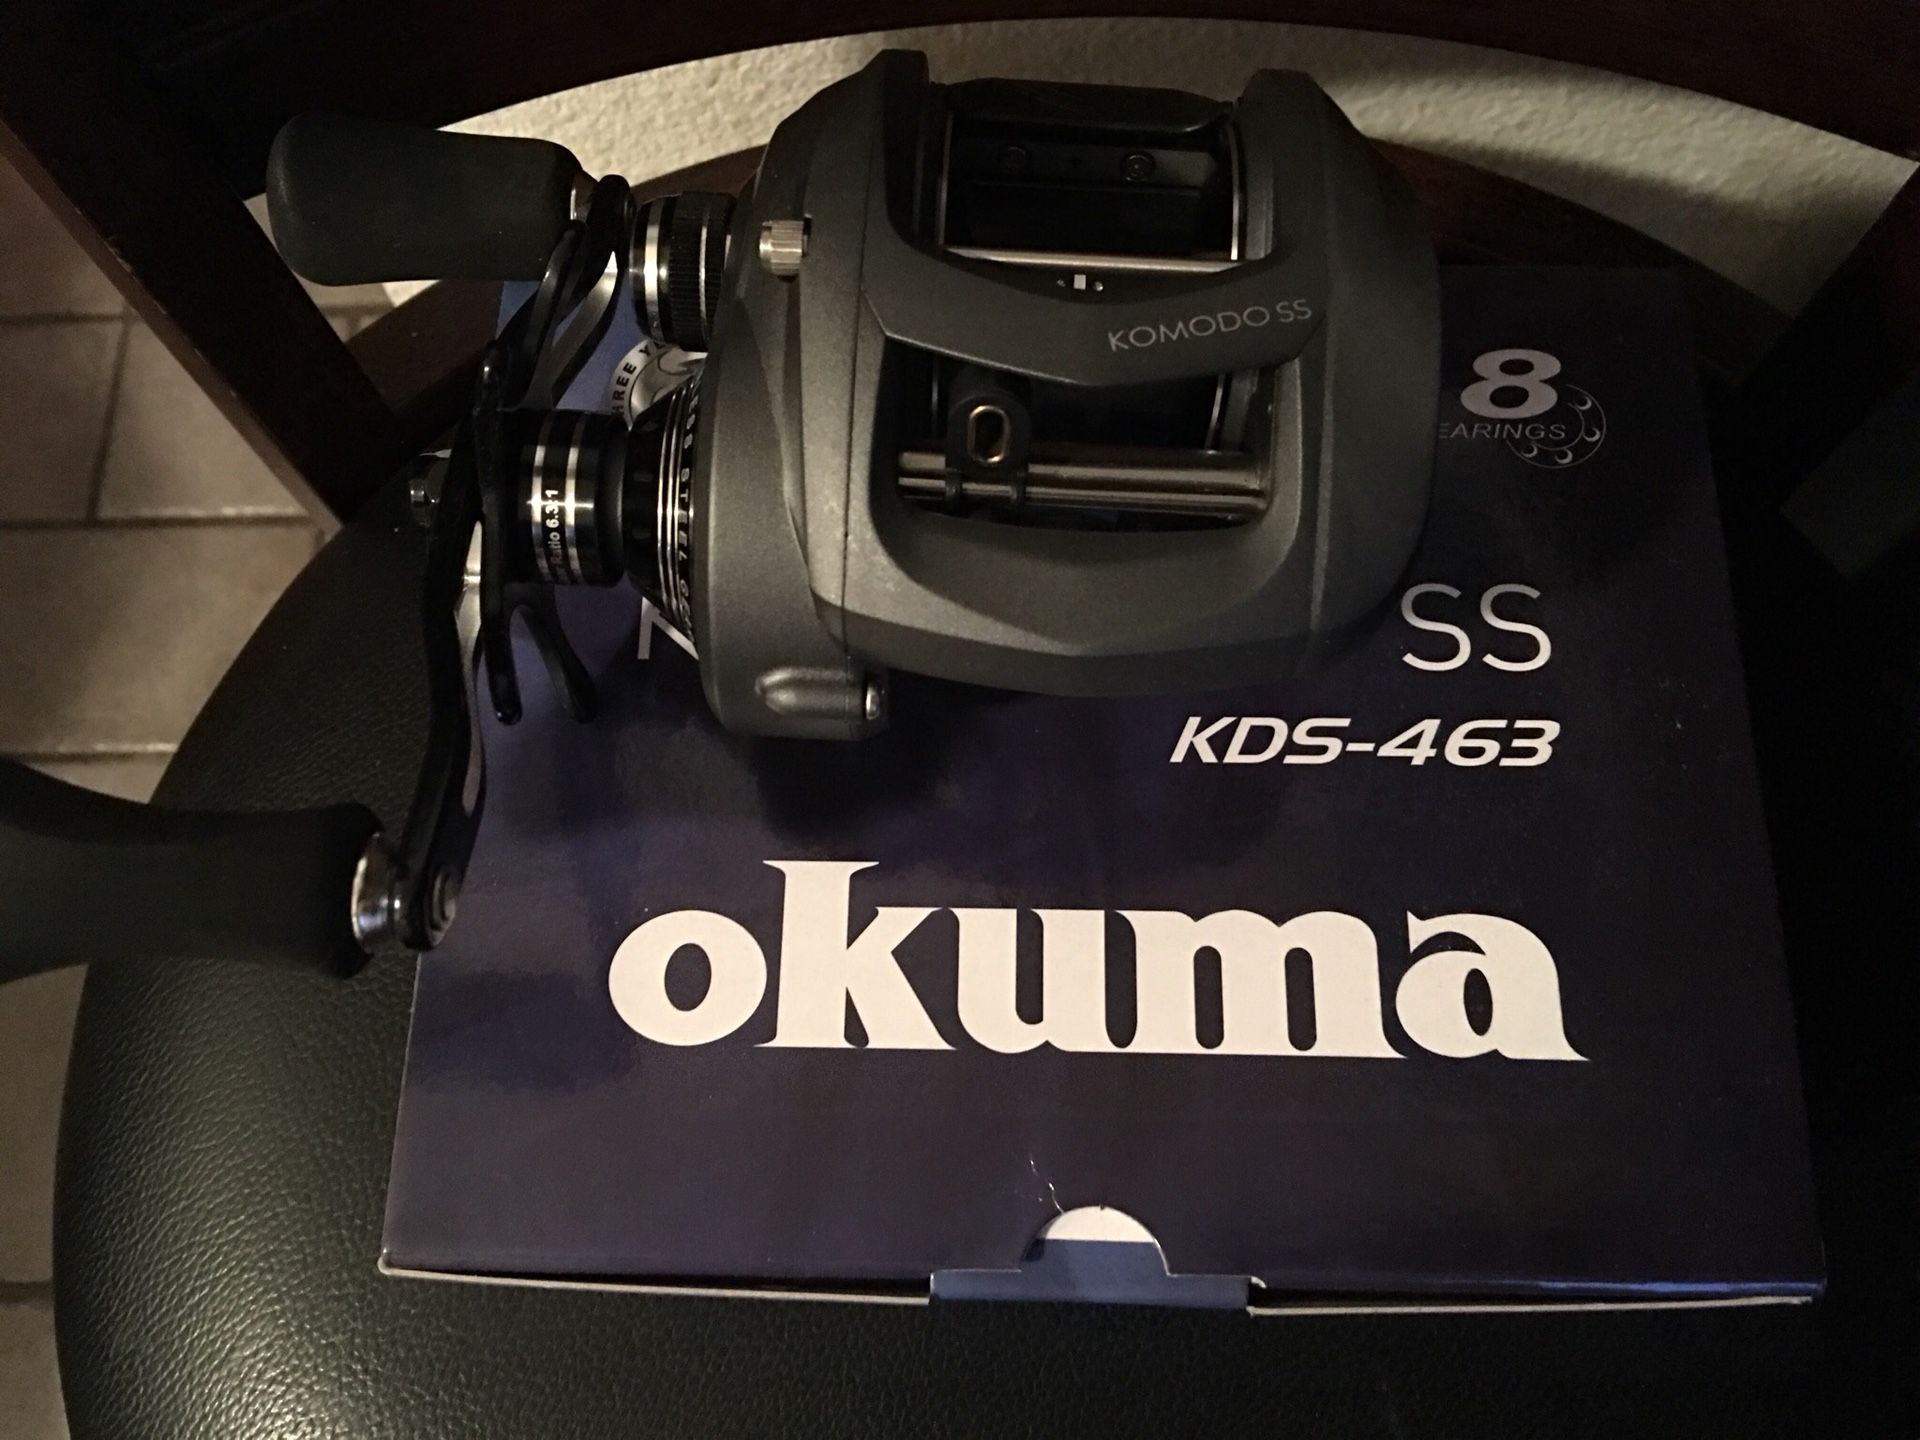 Okuma Komodo SS KDS-463 Casting Fishing Reel for Sale in La Puente